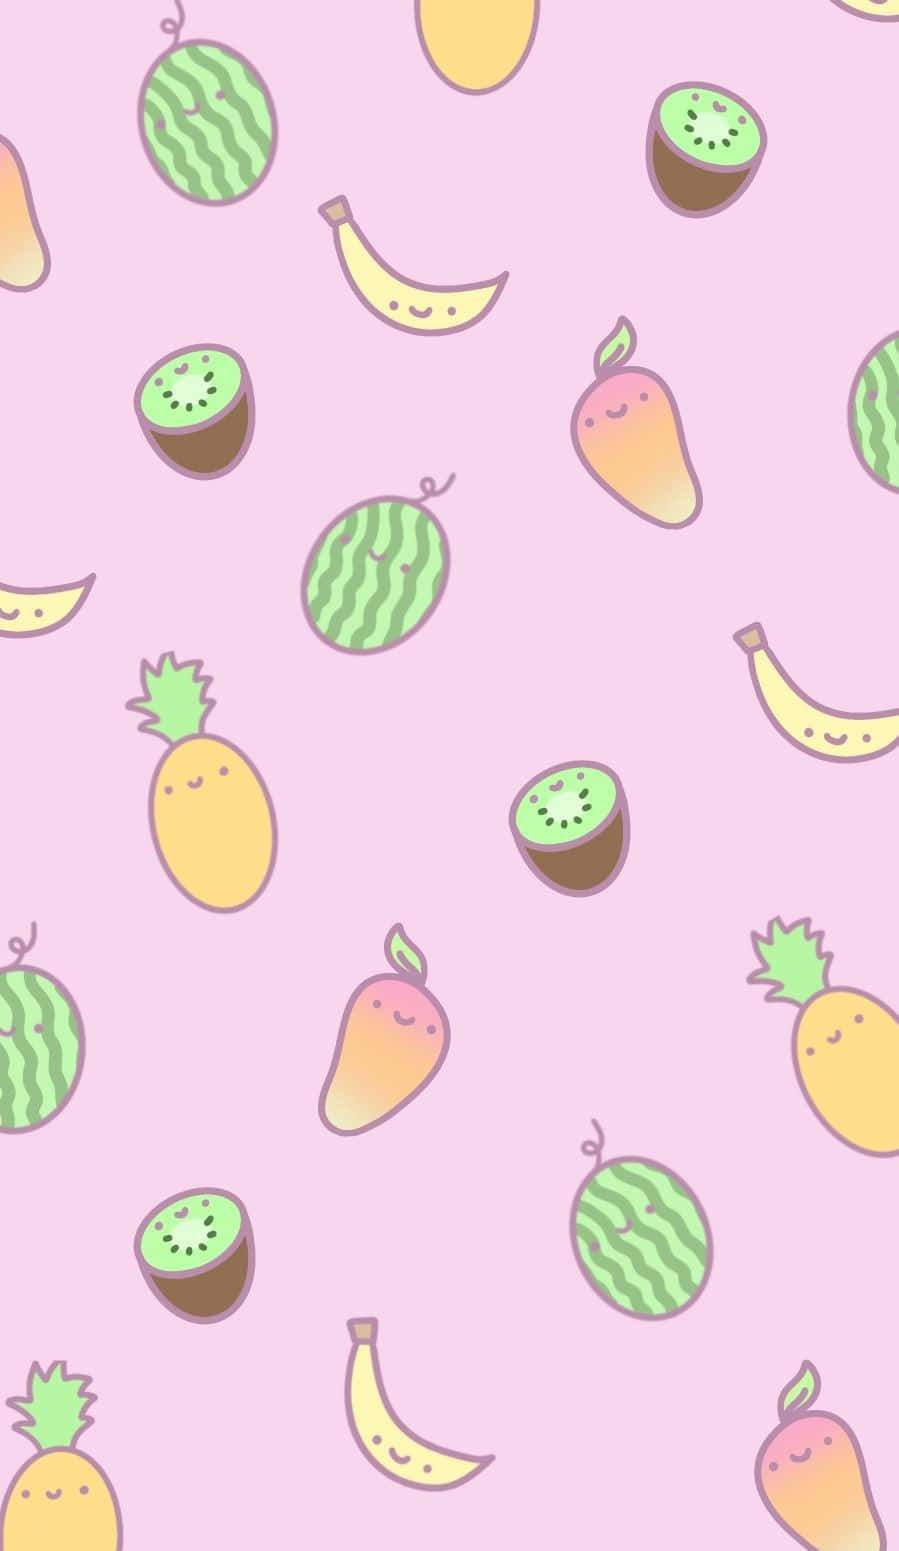 Free Cute Fruit Wallpaper Downloads, [100+] Cute Fruit Wallpapers for FREE  